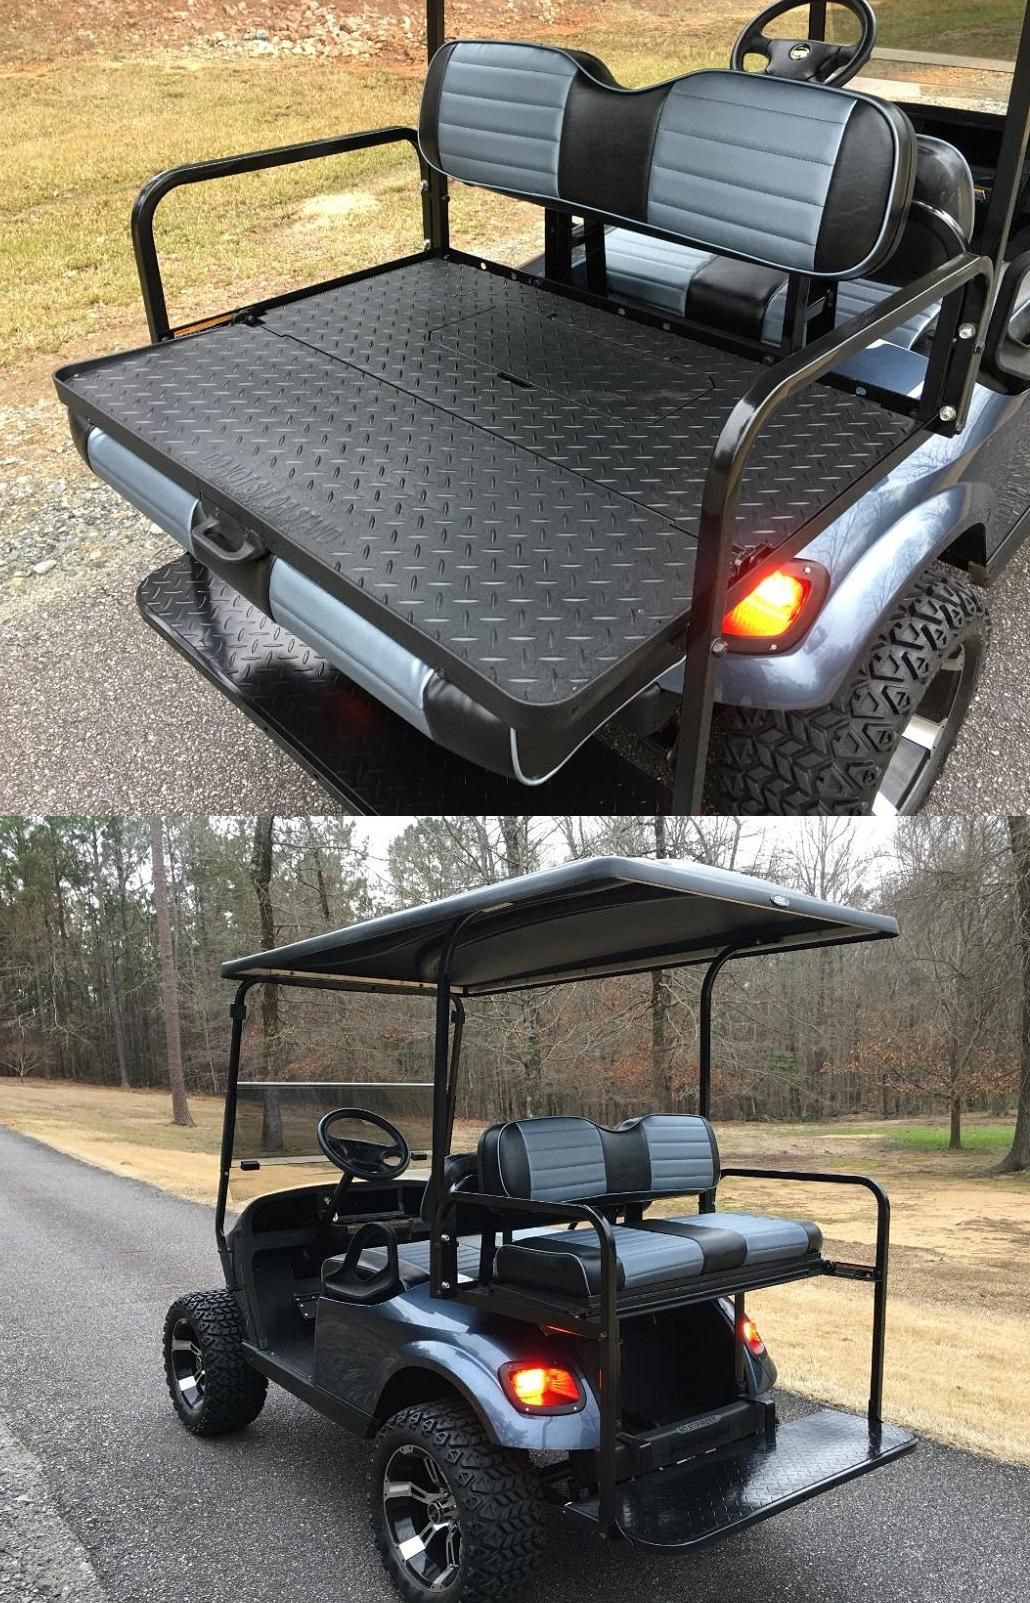 Price$1OOO EZ-GO TXT 2016 electric golf cart